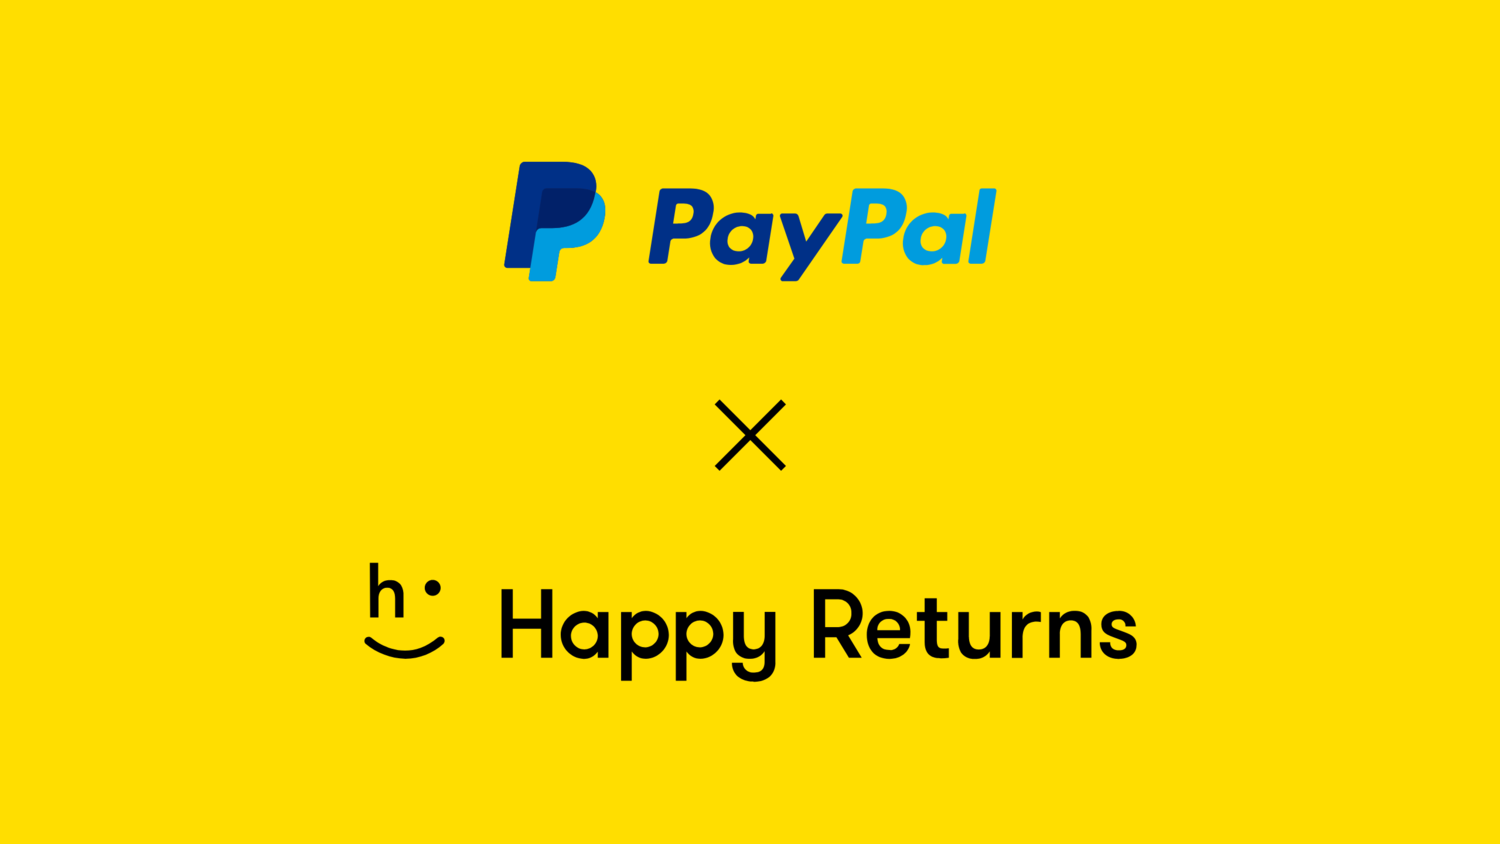 alt="Happy Returns"